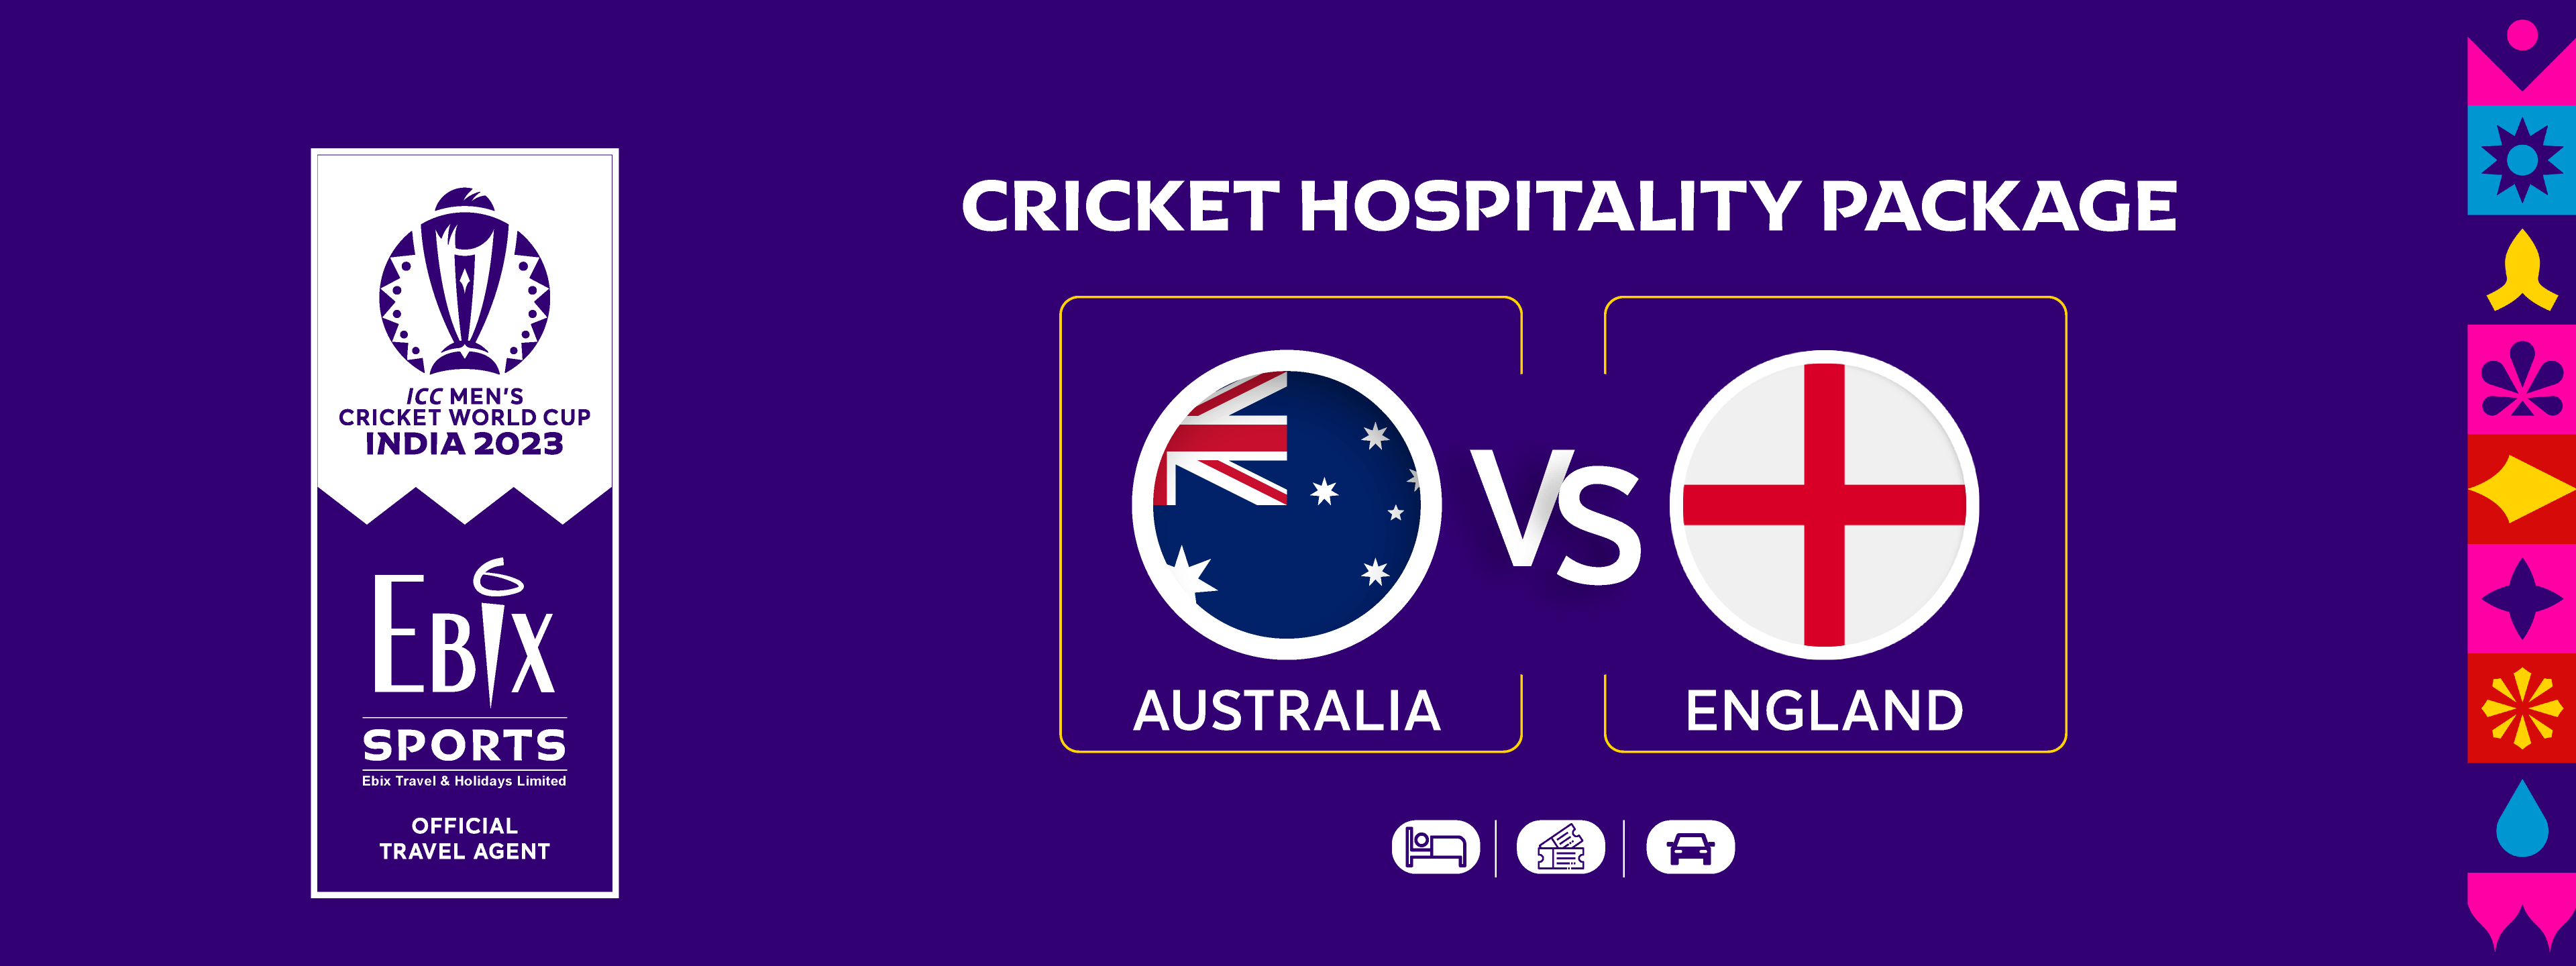 Australia v/s England